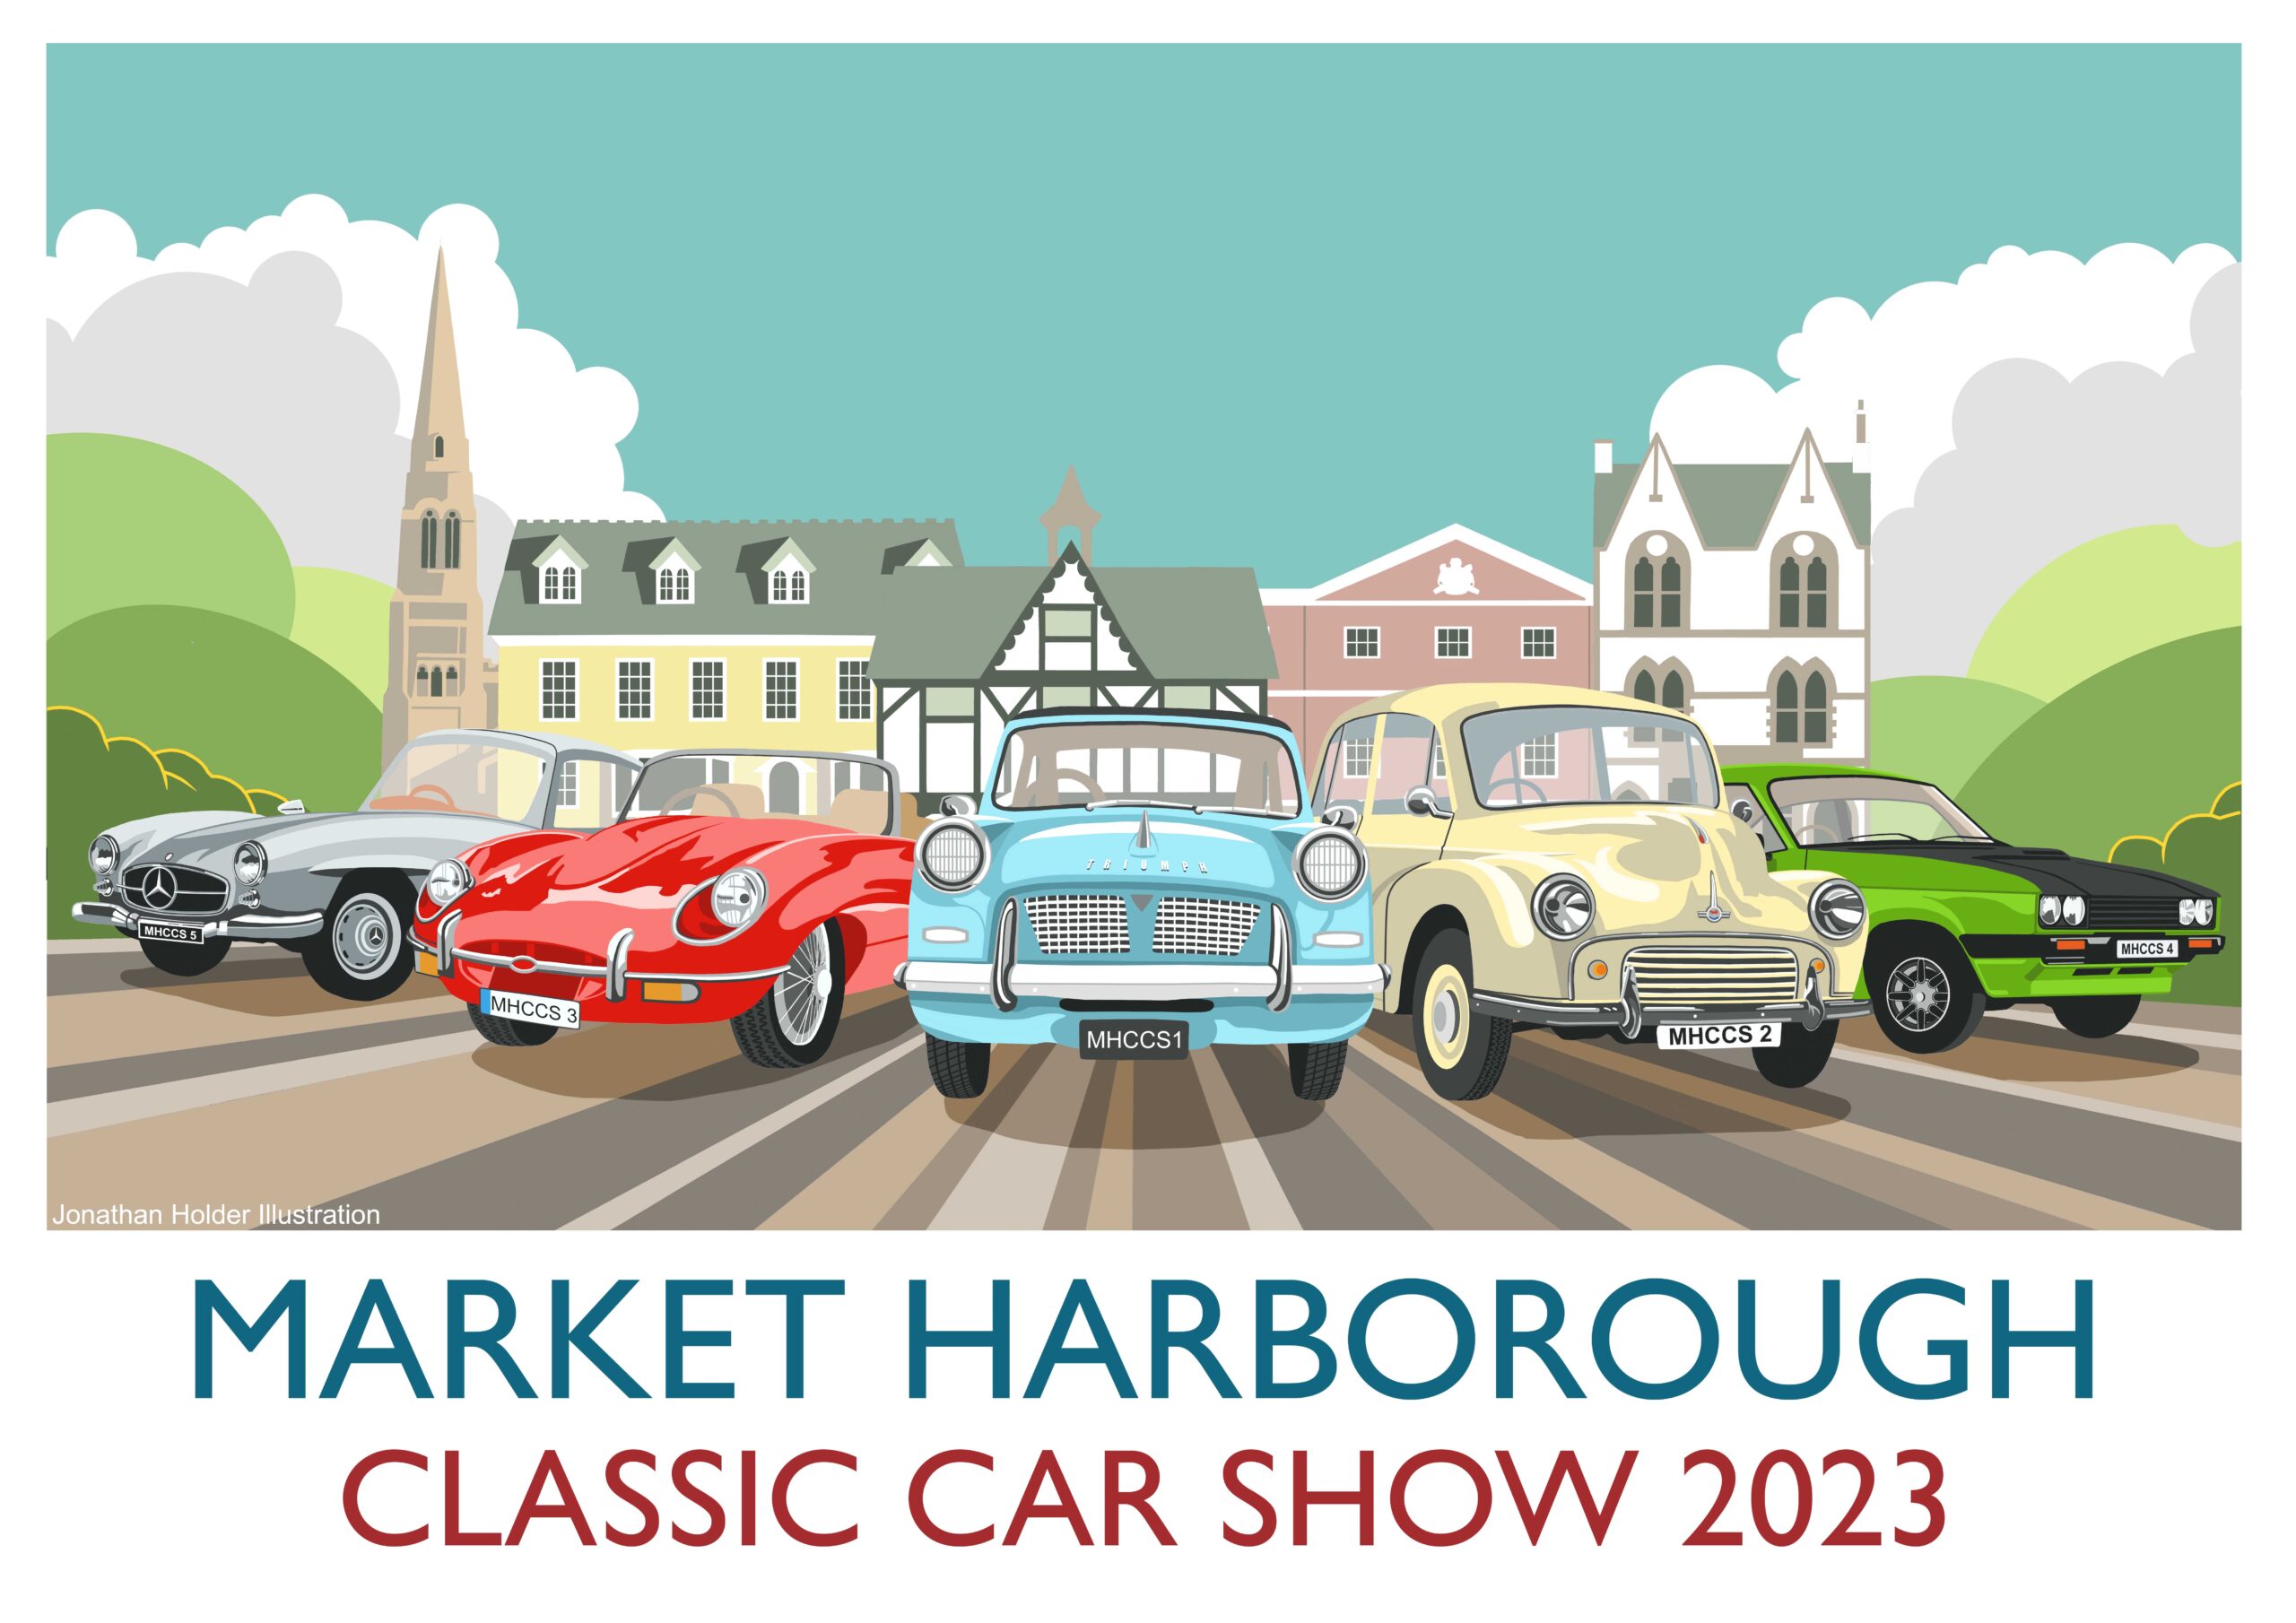 shwo Harborough Classic Car 